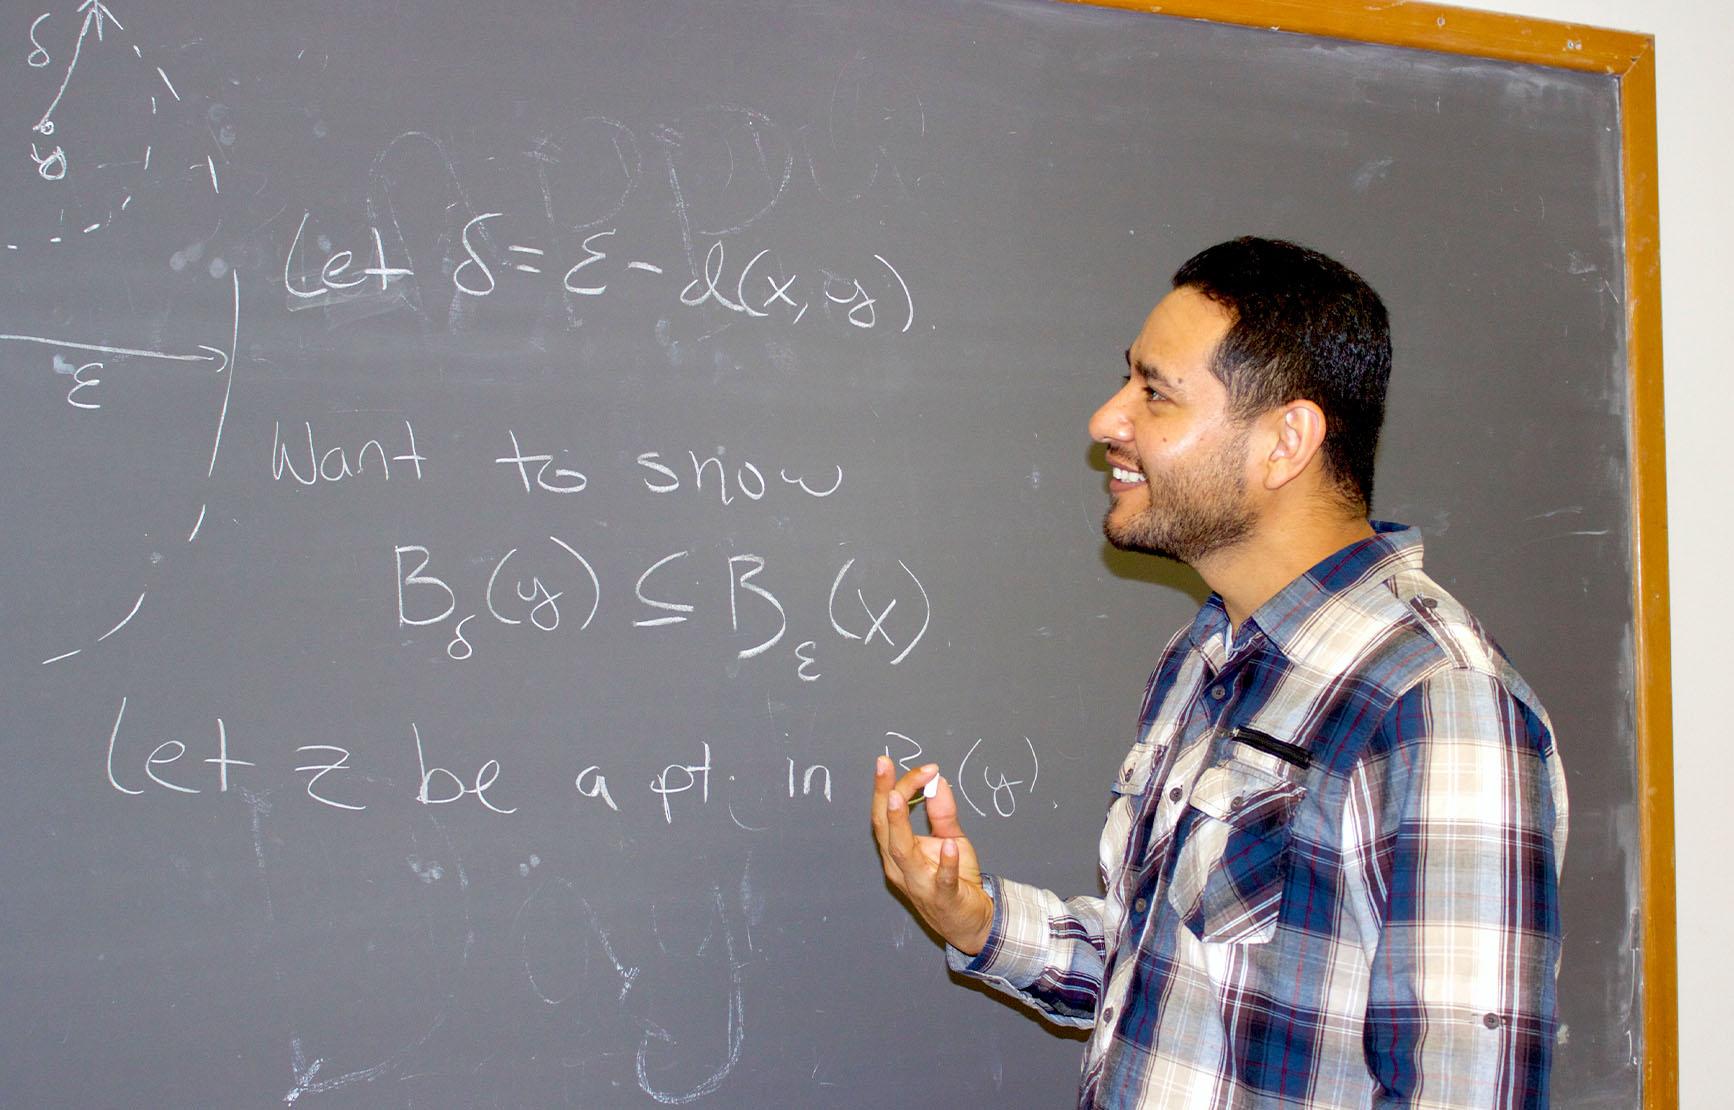 Michael Lopez writing equations on blackboard.